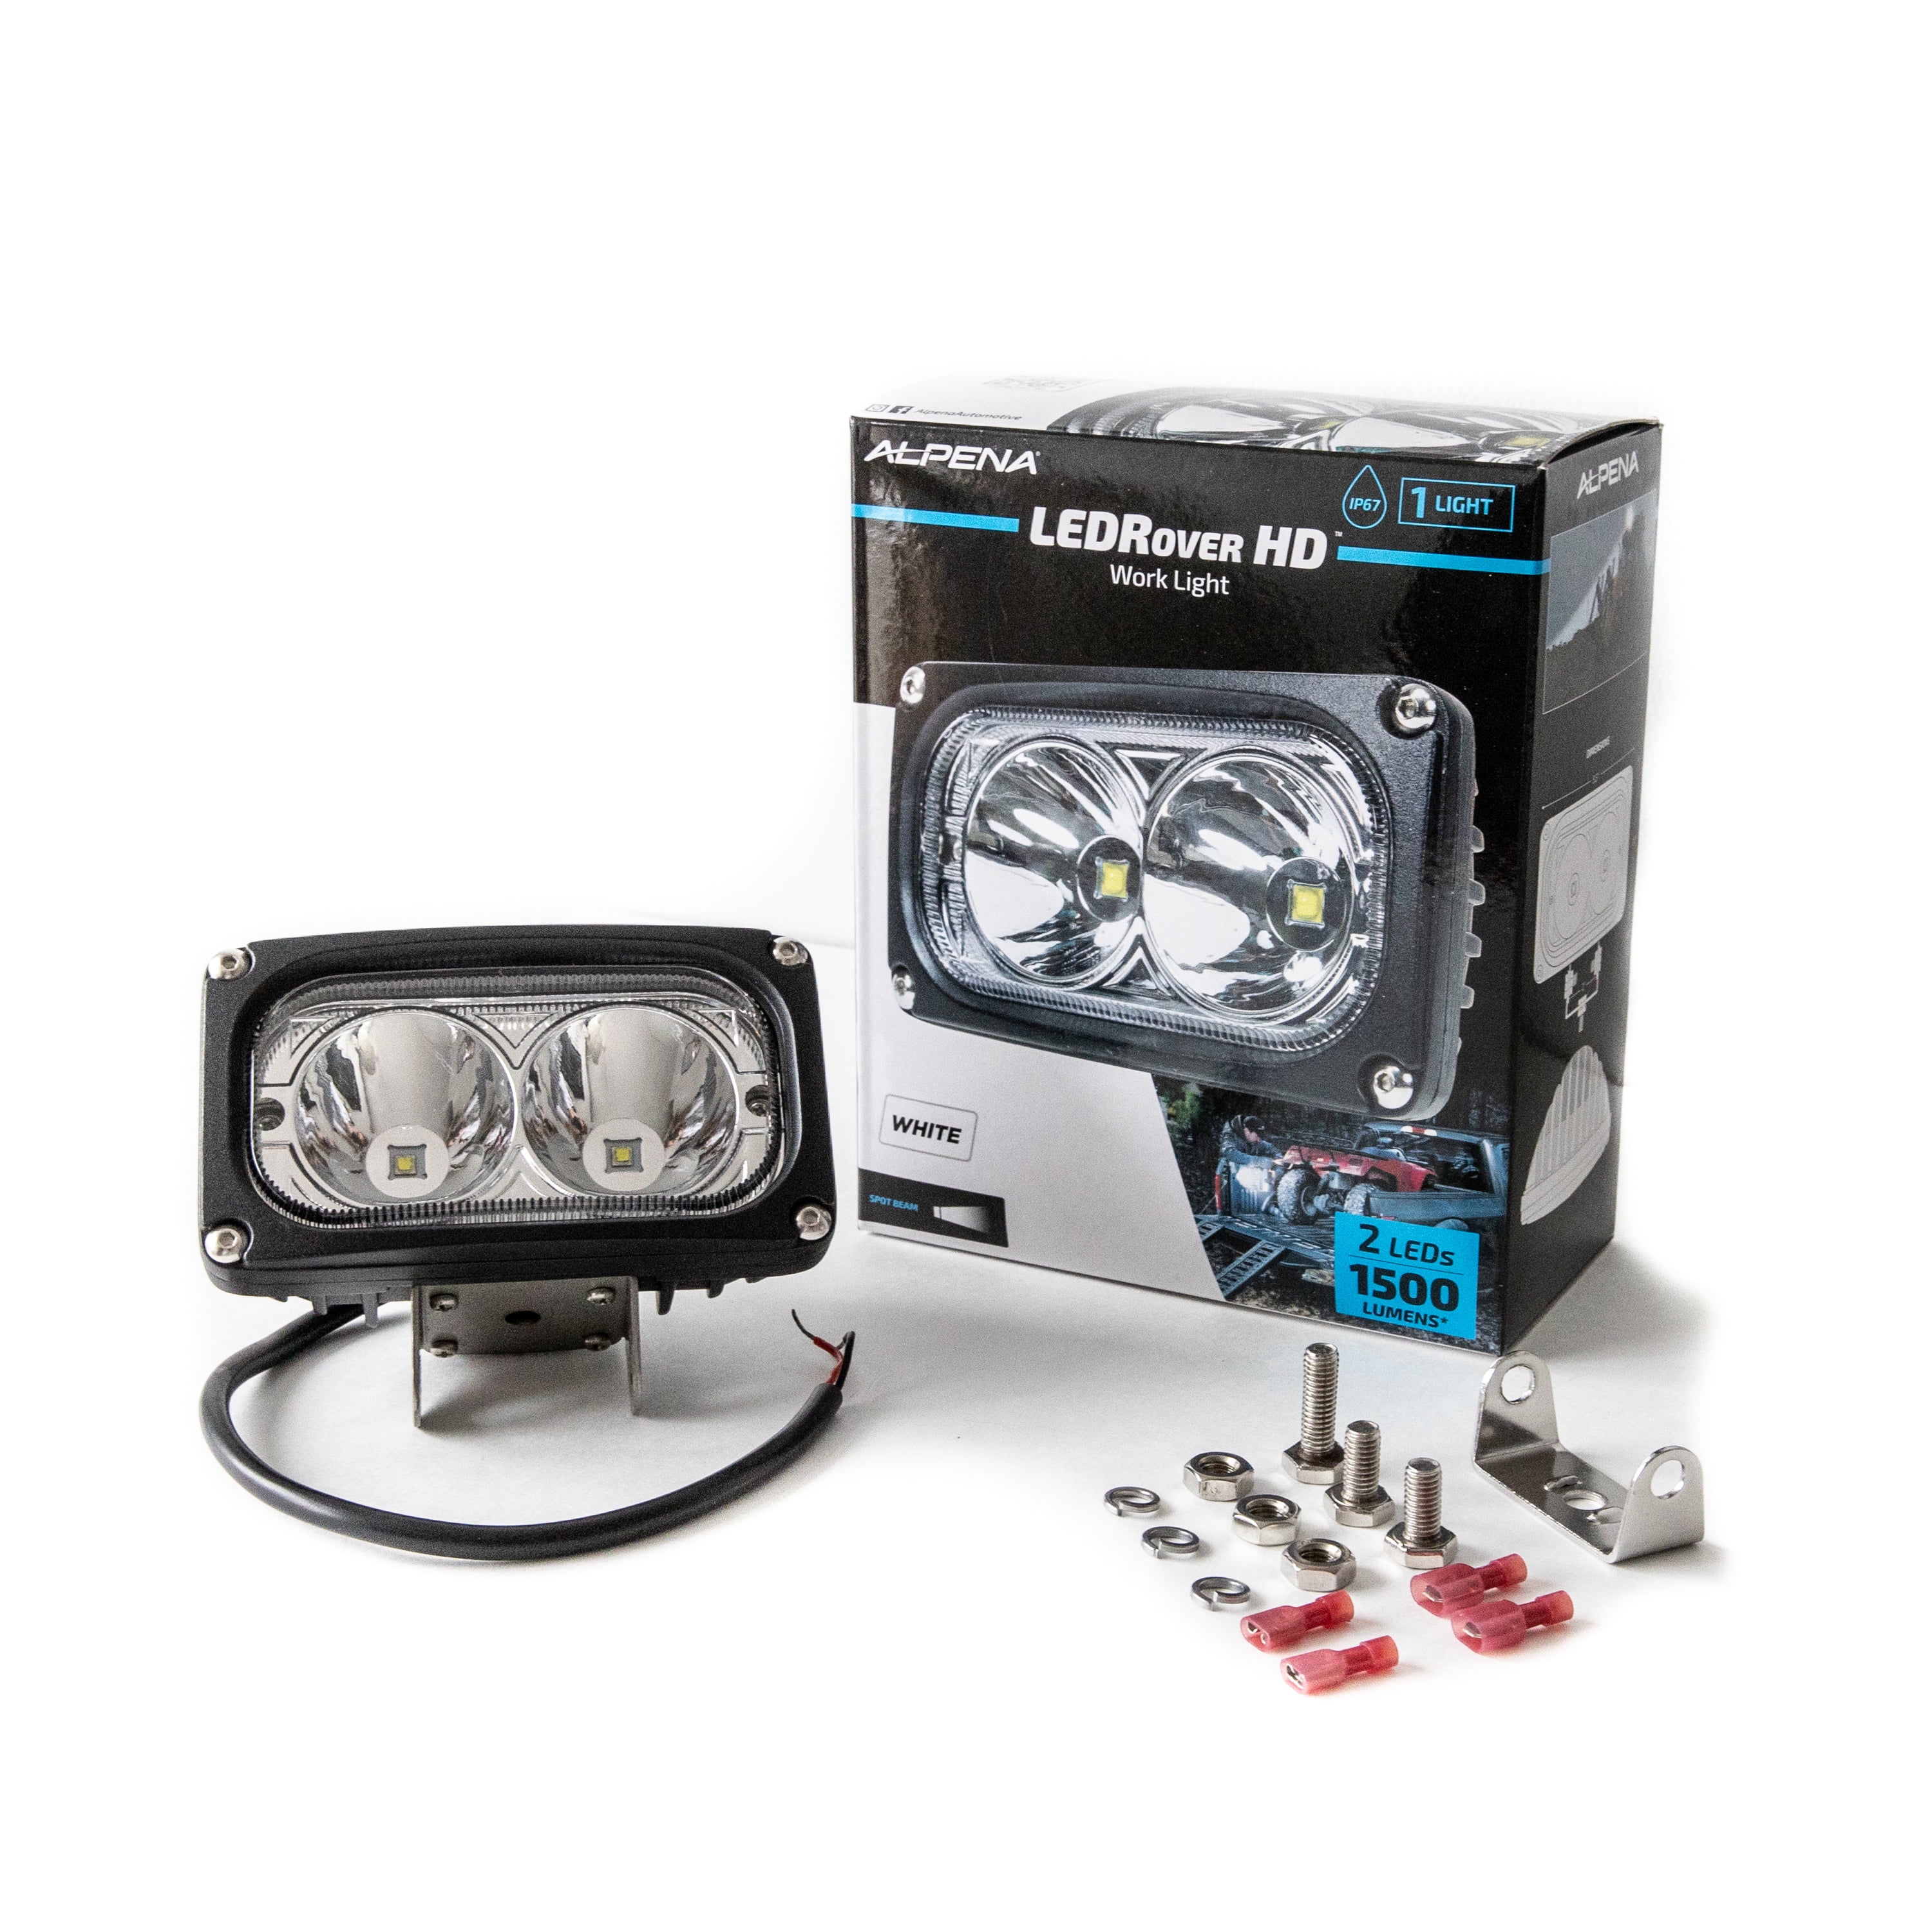 Alpena LEDRover HD, 12V, LED Spotlight, Model 77678, Universal Fit for Vehicles